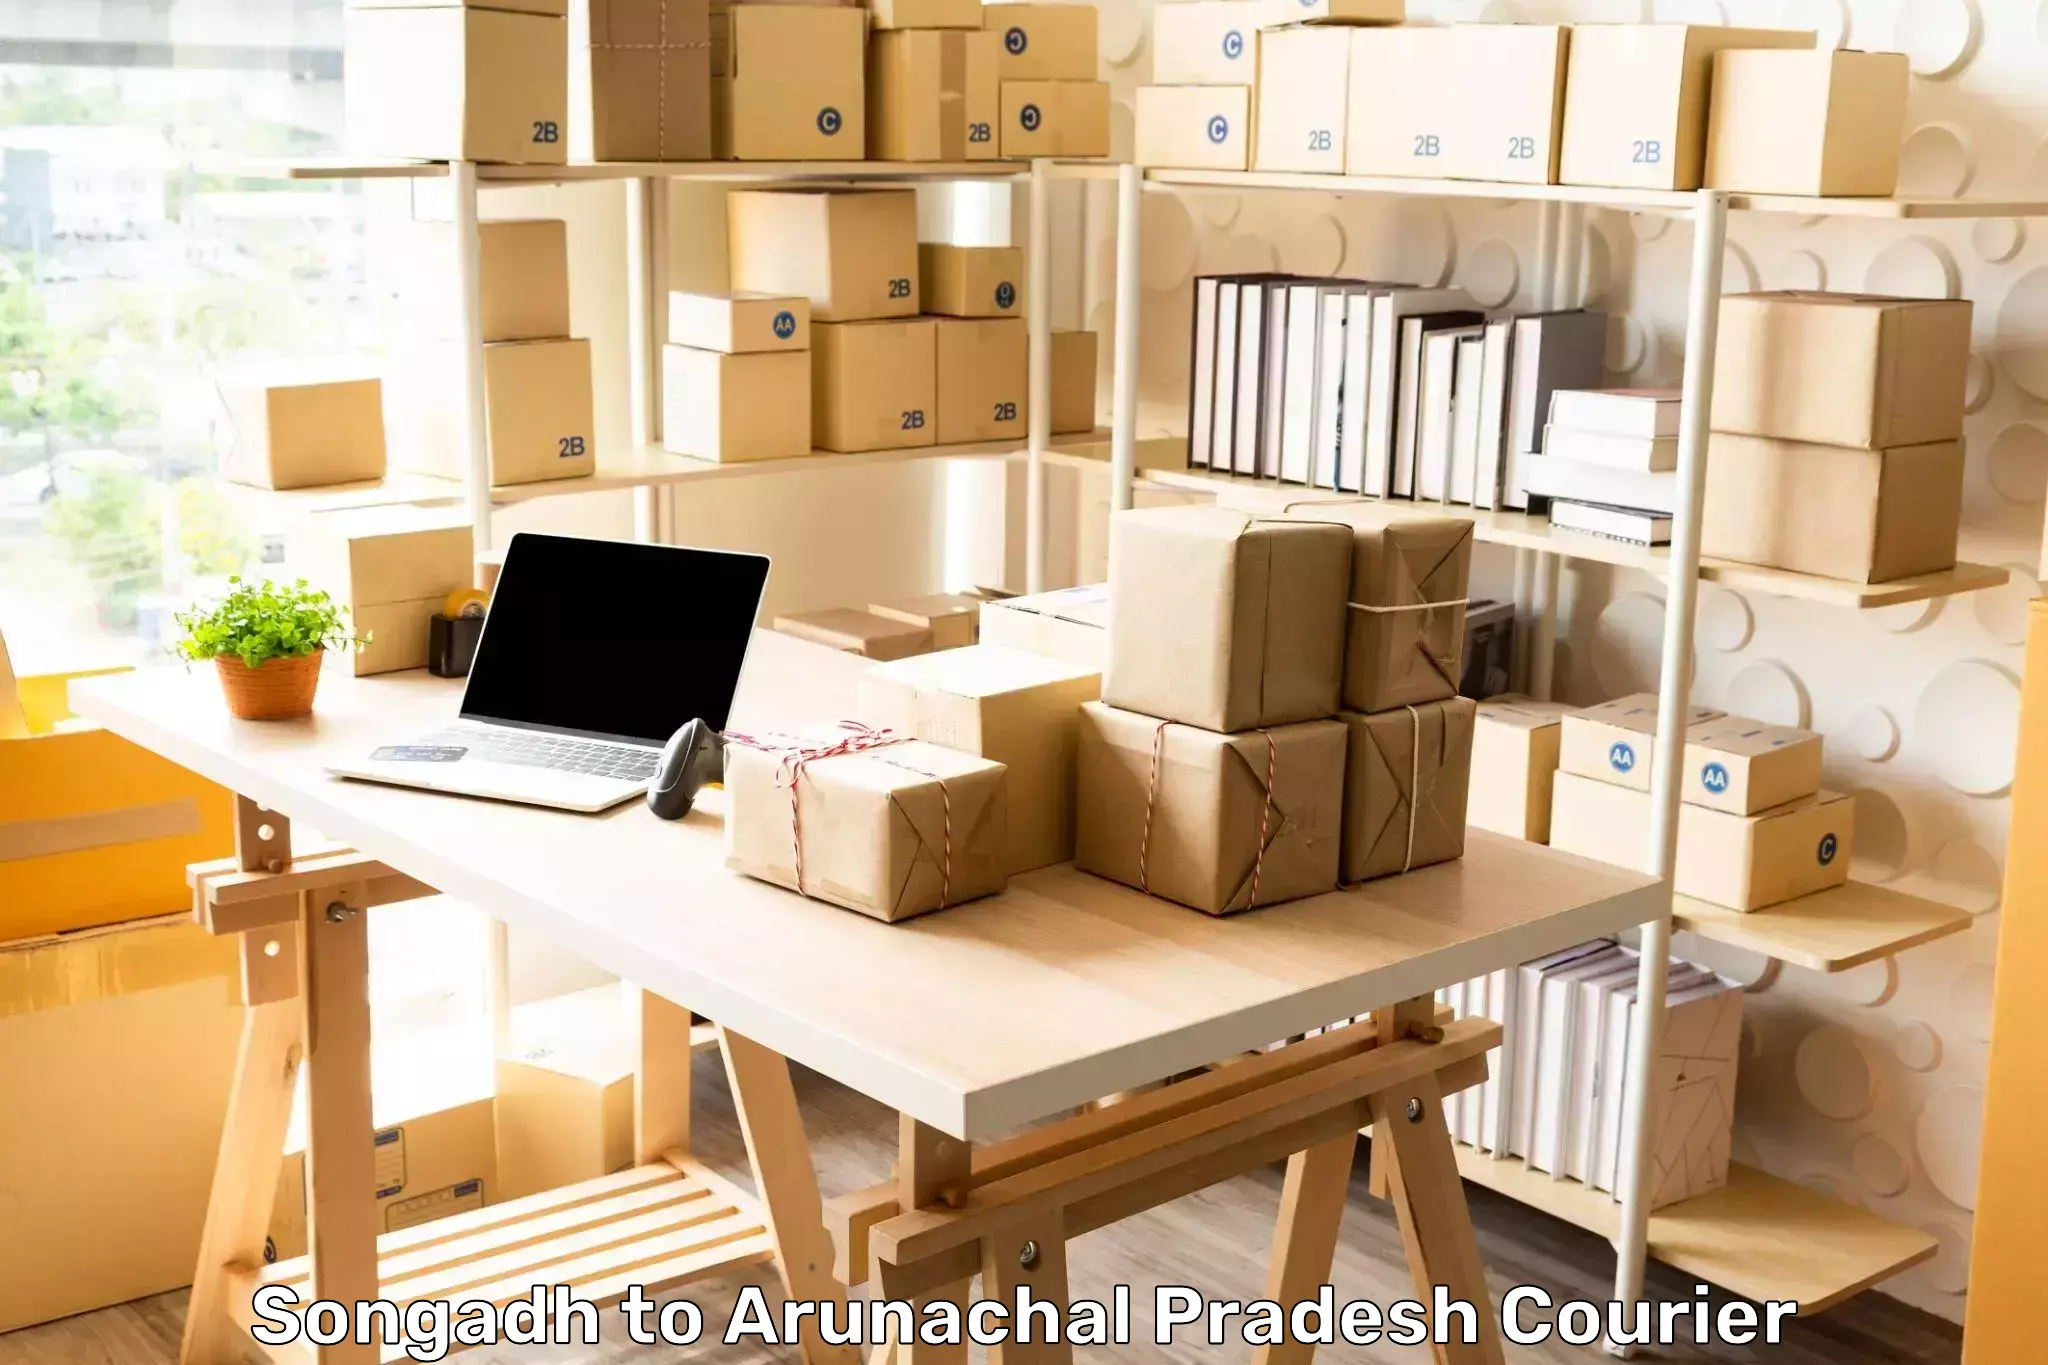 Logistics management Songadh to Arunachal Pradesh